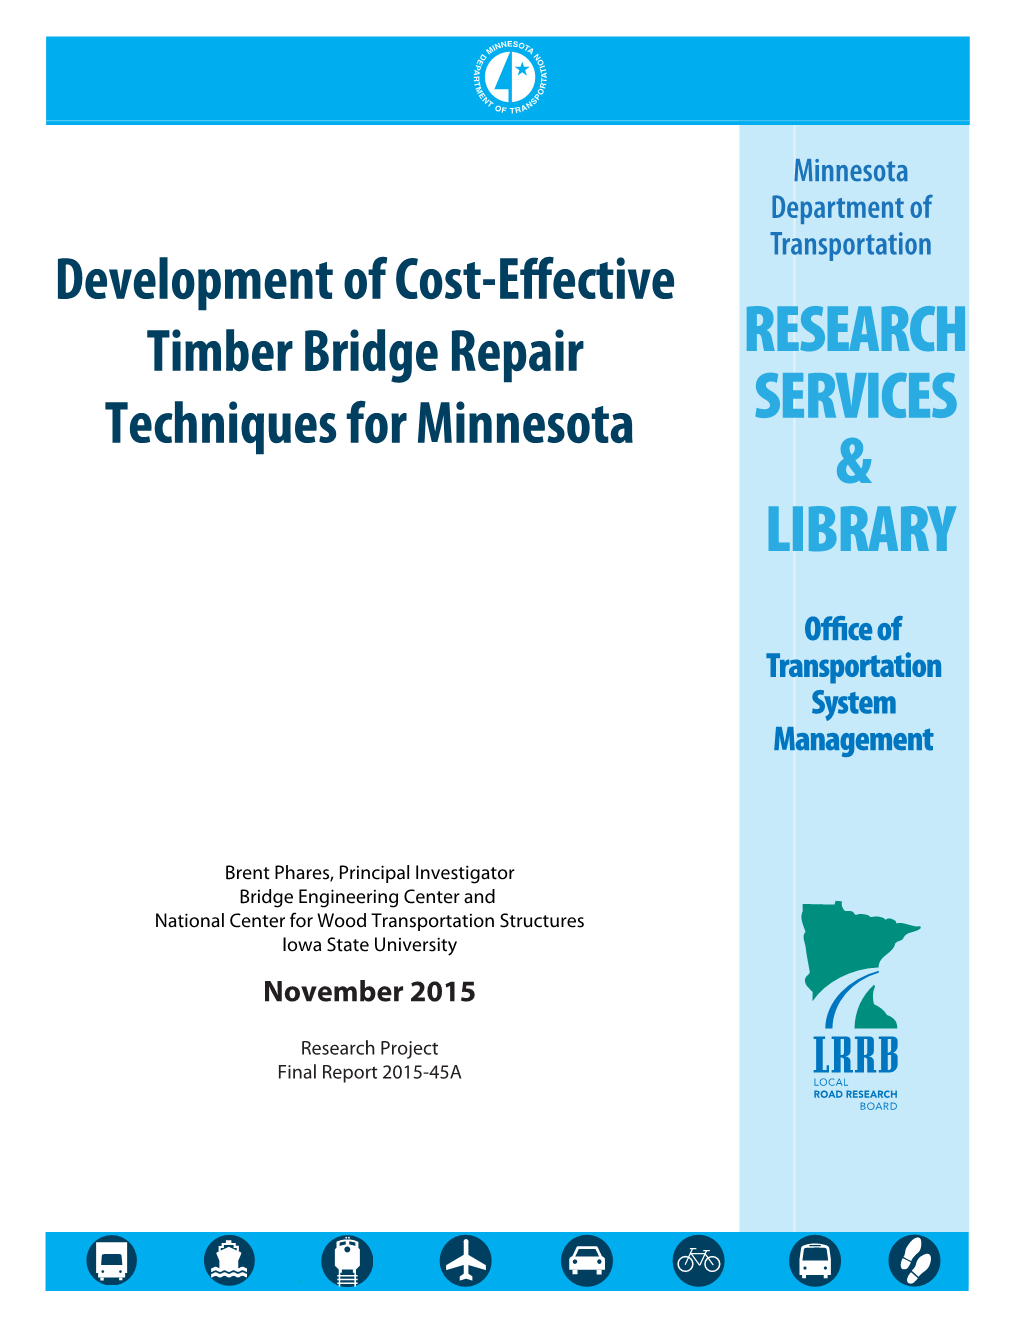 Development of Cost-Effective Timber Bridge Repair Techniques for Minnesota